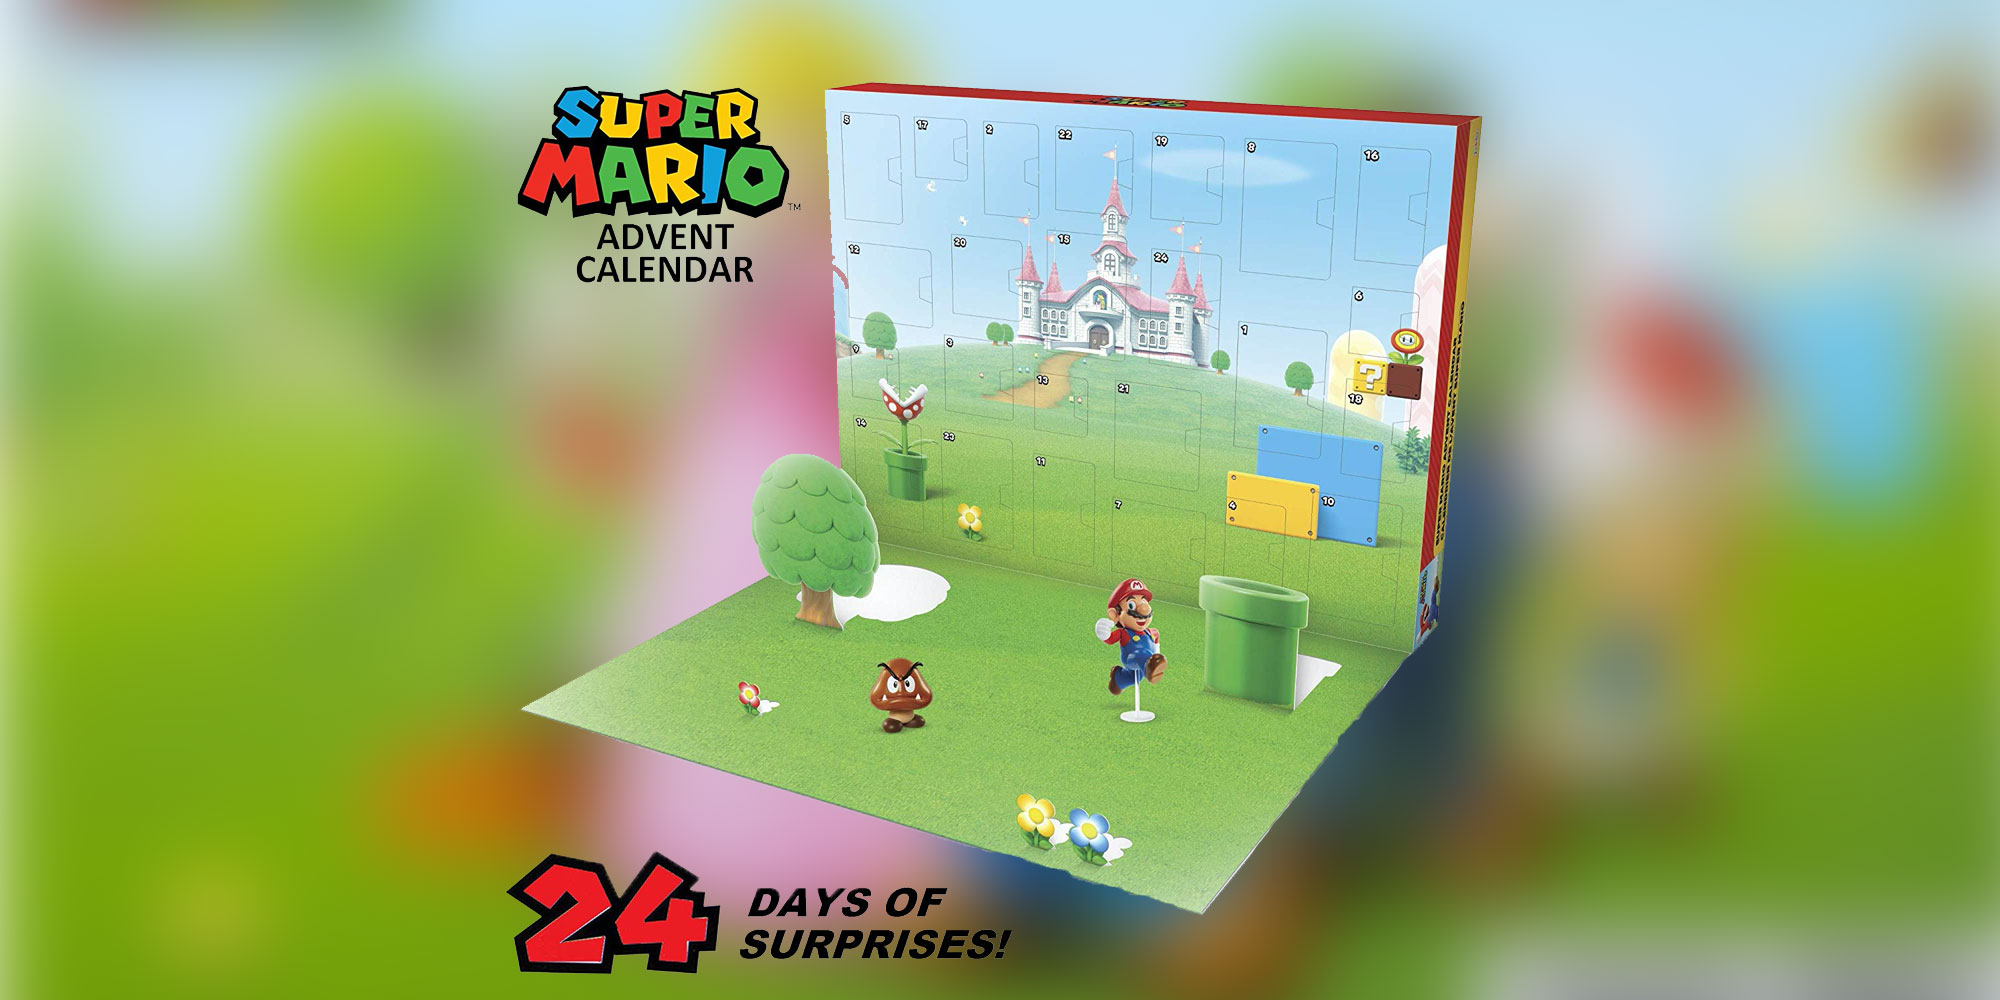 Nintendo #39 s Super Mario Advent Calendar has 17 2 5 inch figures   more